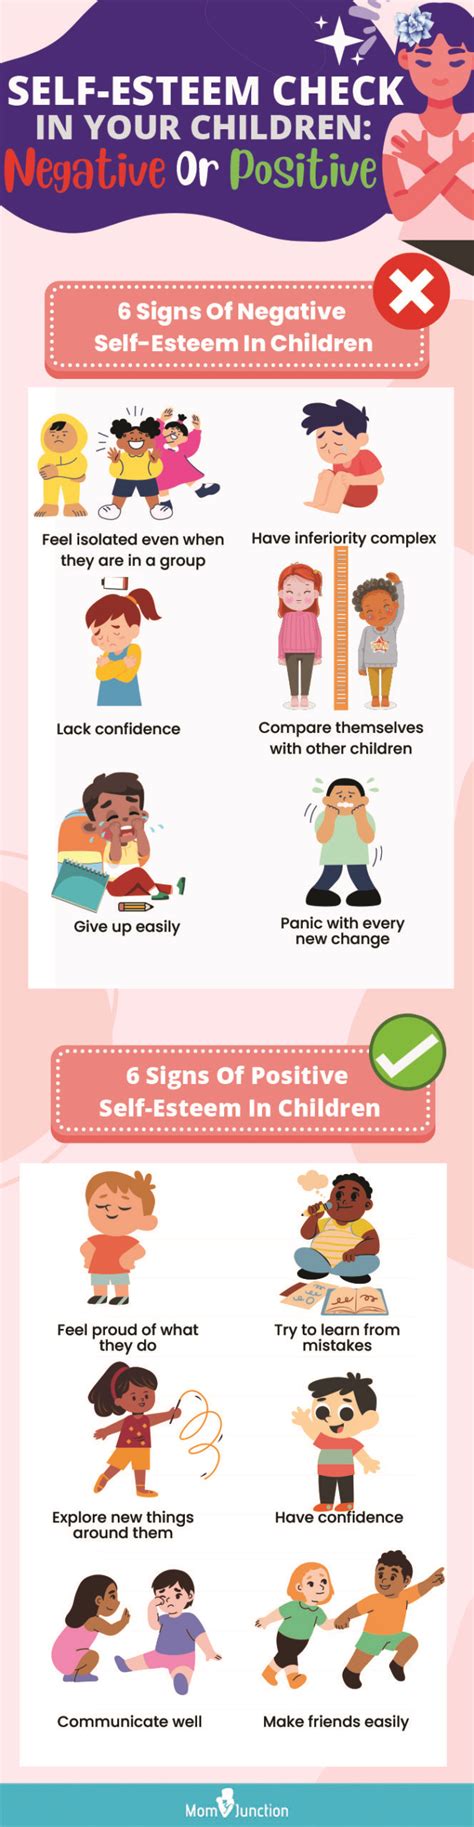 7 Tips To Build Self Esteem In Children And Activities To Do Momjunction